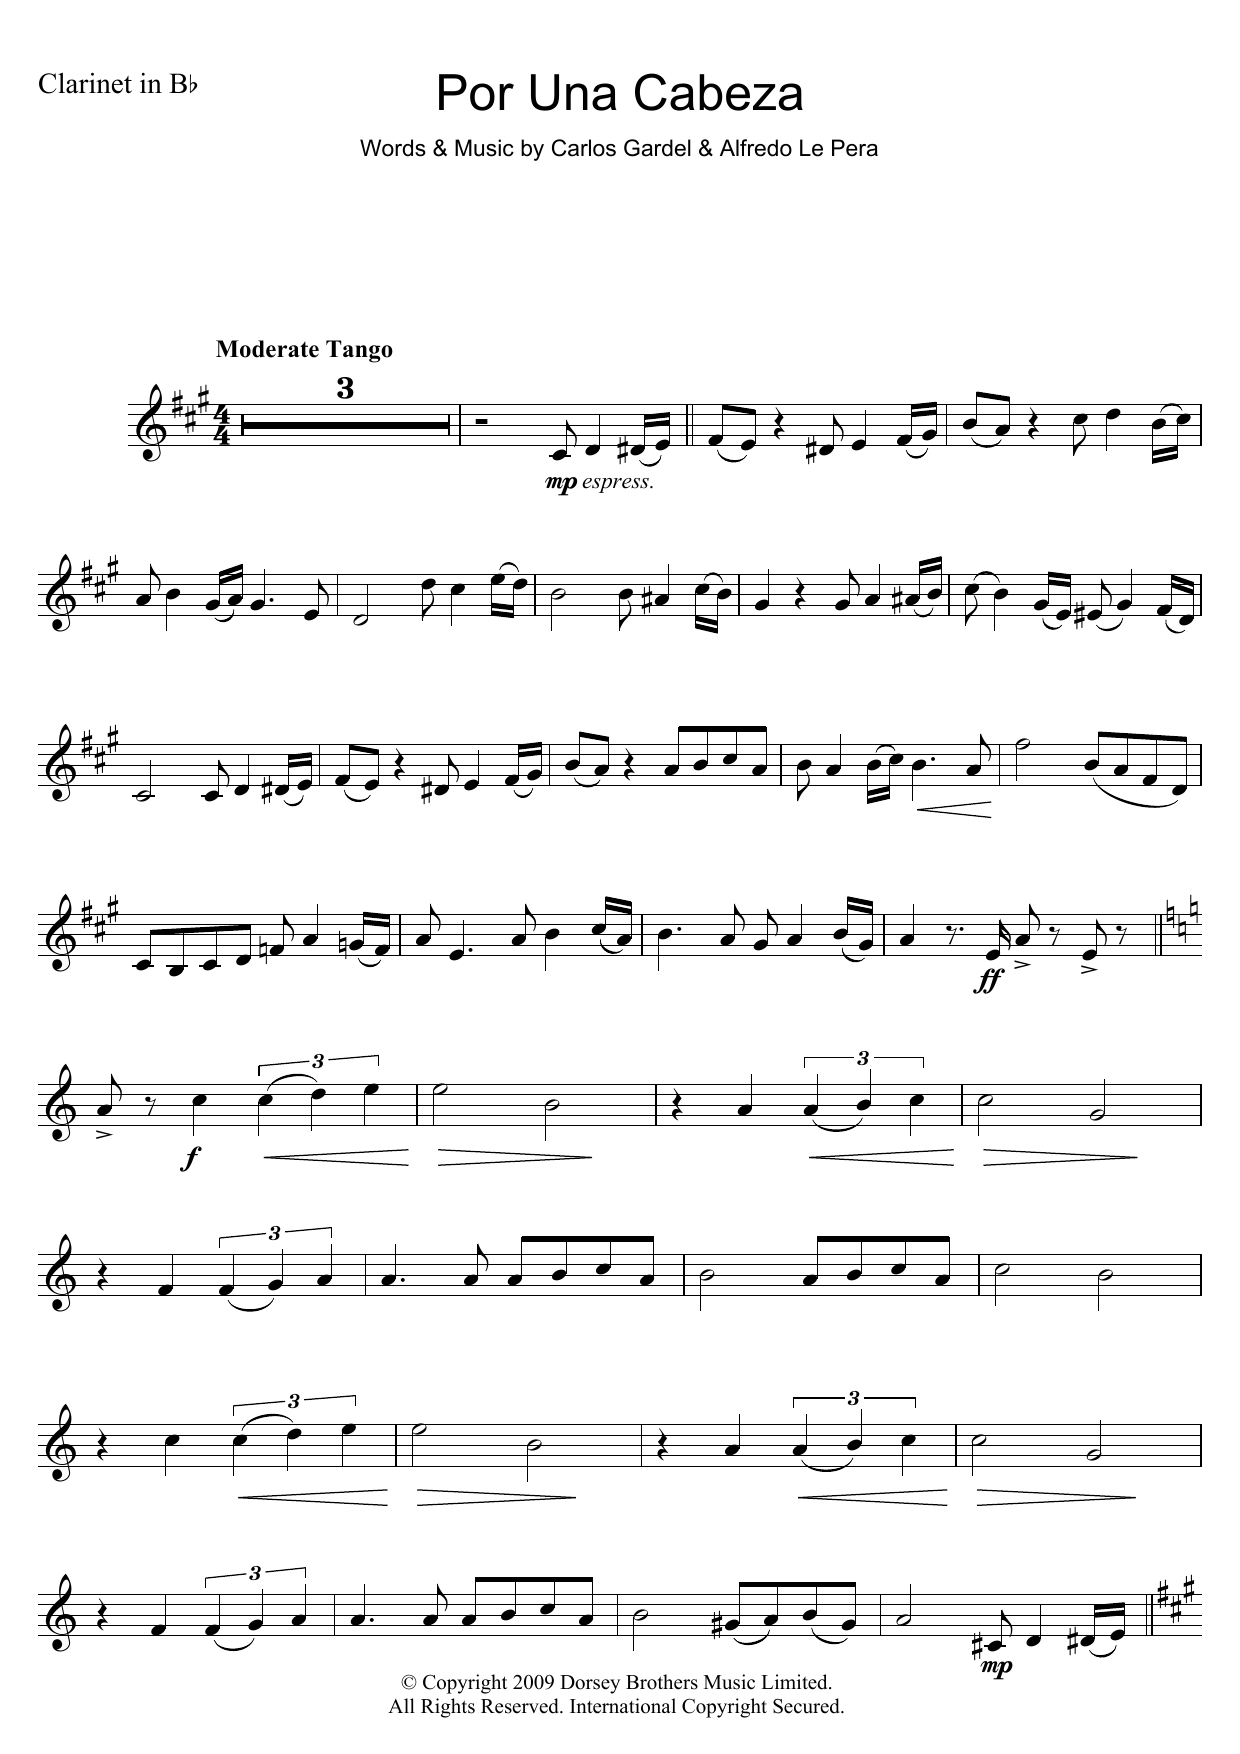 Carlos Gardel Por Una Cabeza Sheet Music Notes & Chords for Clarinet - Download or Print PDF